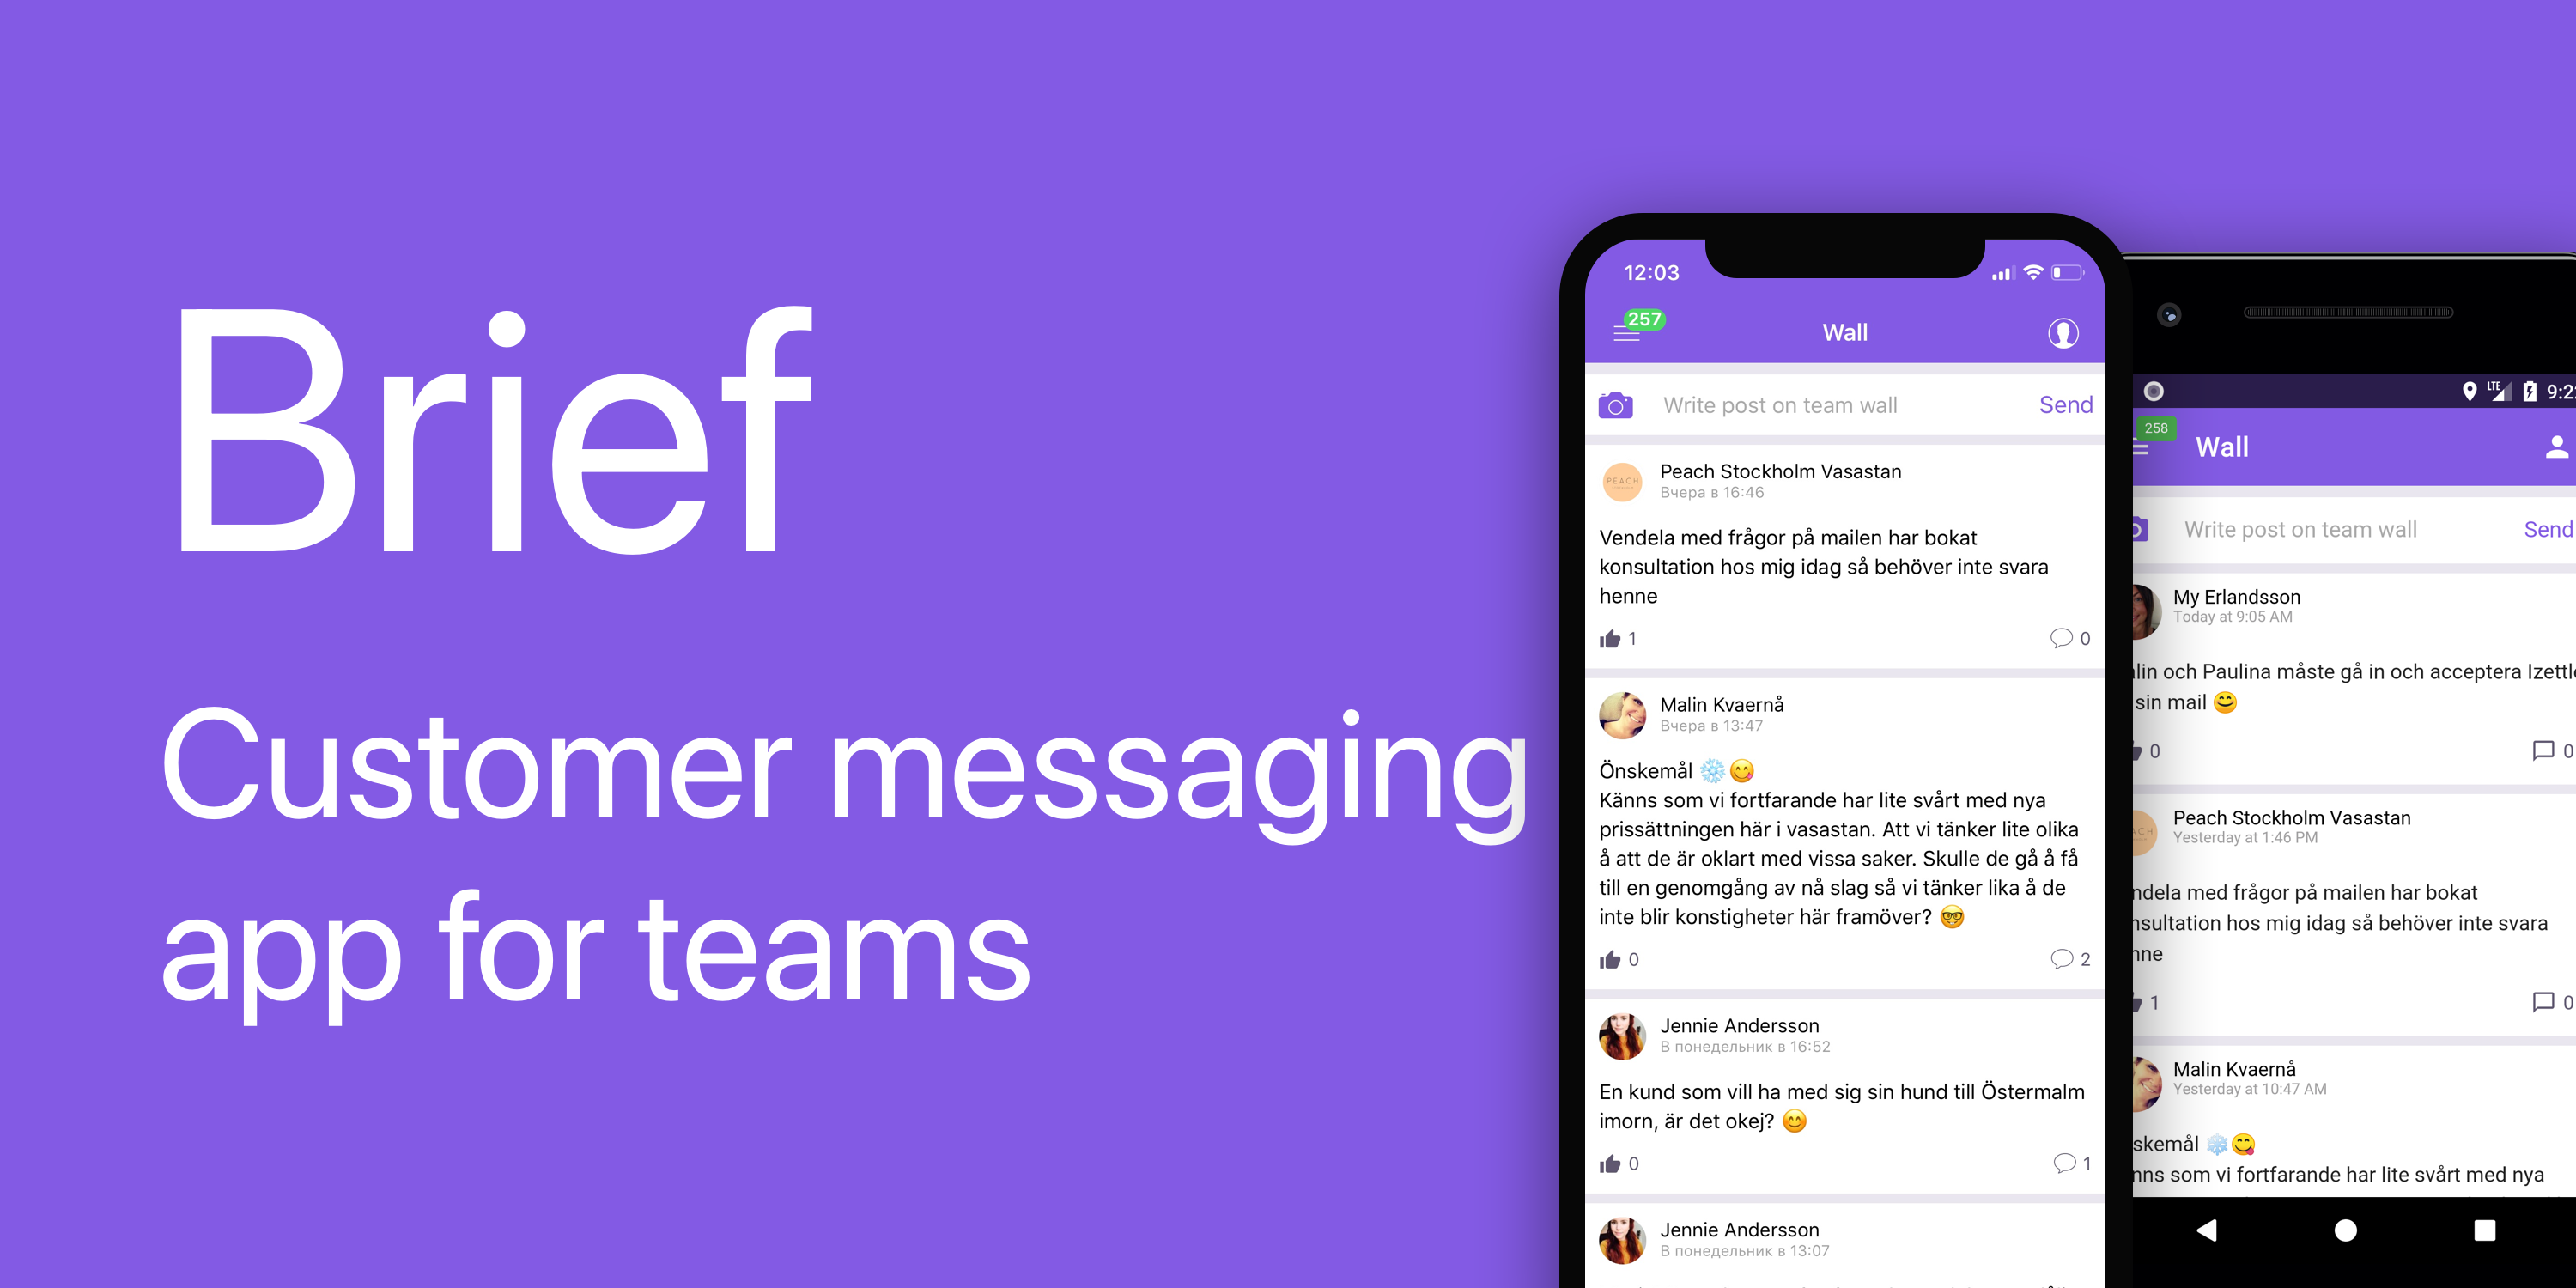 Built with Framework7: Brief - Customer messaging app